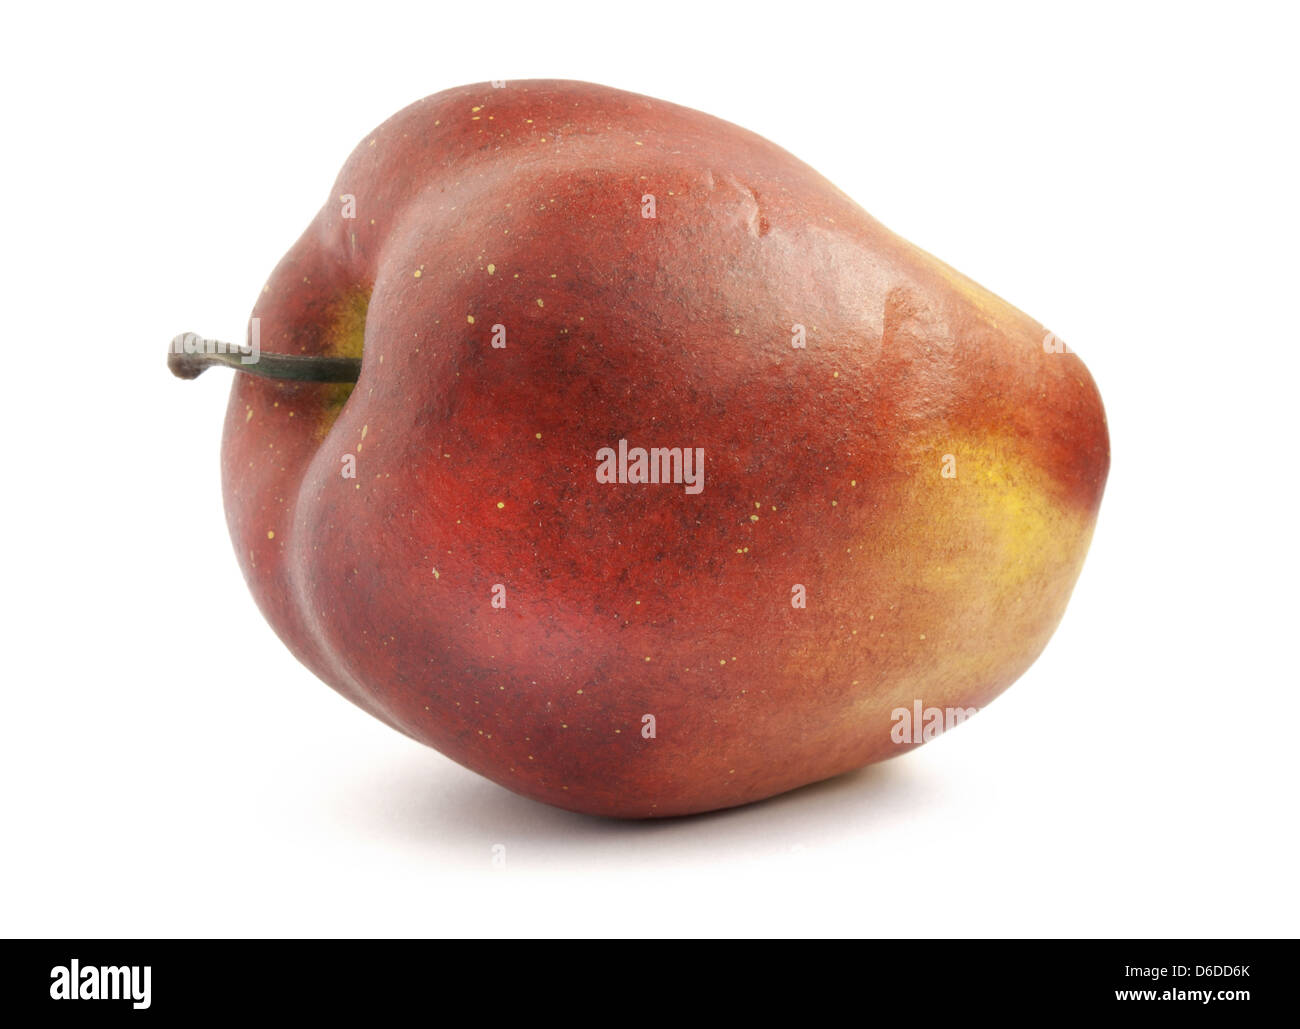 Plastic artificial apple fruit Stock Photo